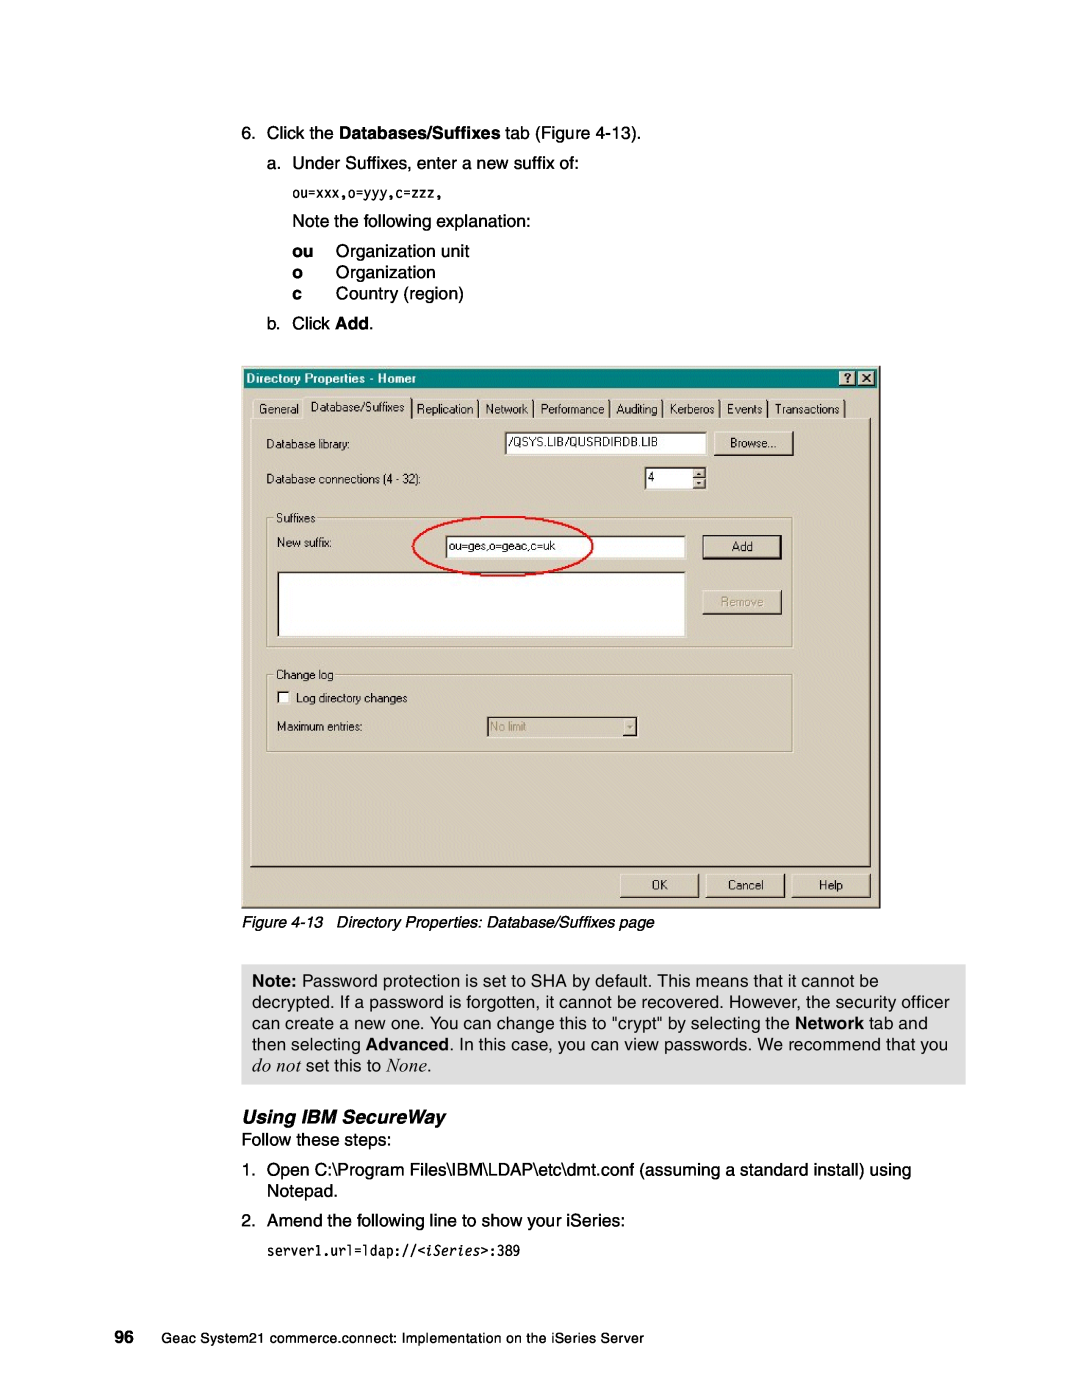 IBM SG24-6526-00 manual Using IBM SecureWay, 13 Directory Properties Database/Suffixes page 